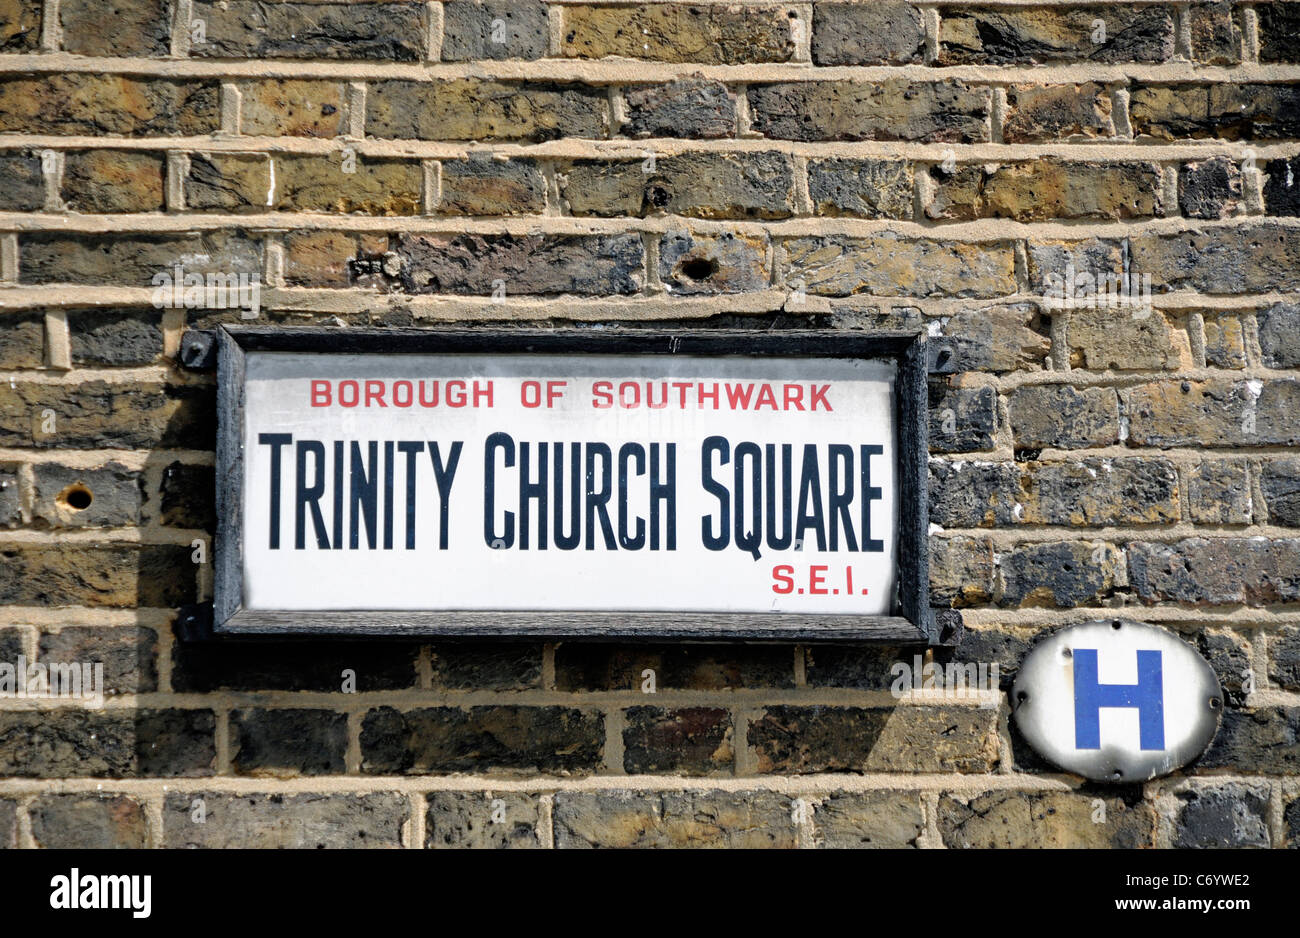 Trinity Church Square Street Zeichen London Borough of Southwark SE1 England UK Stockfoto